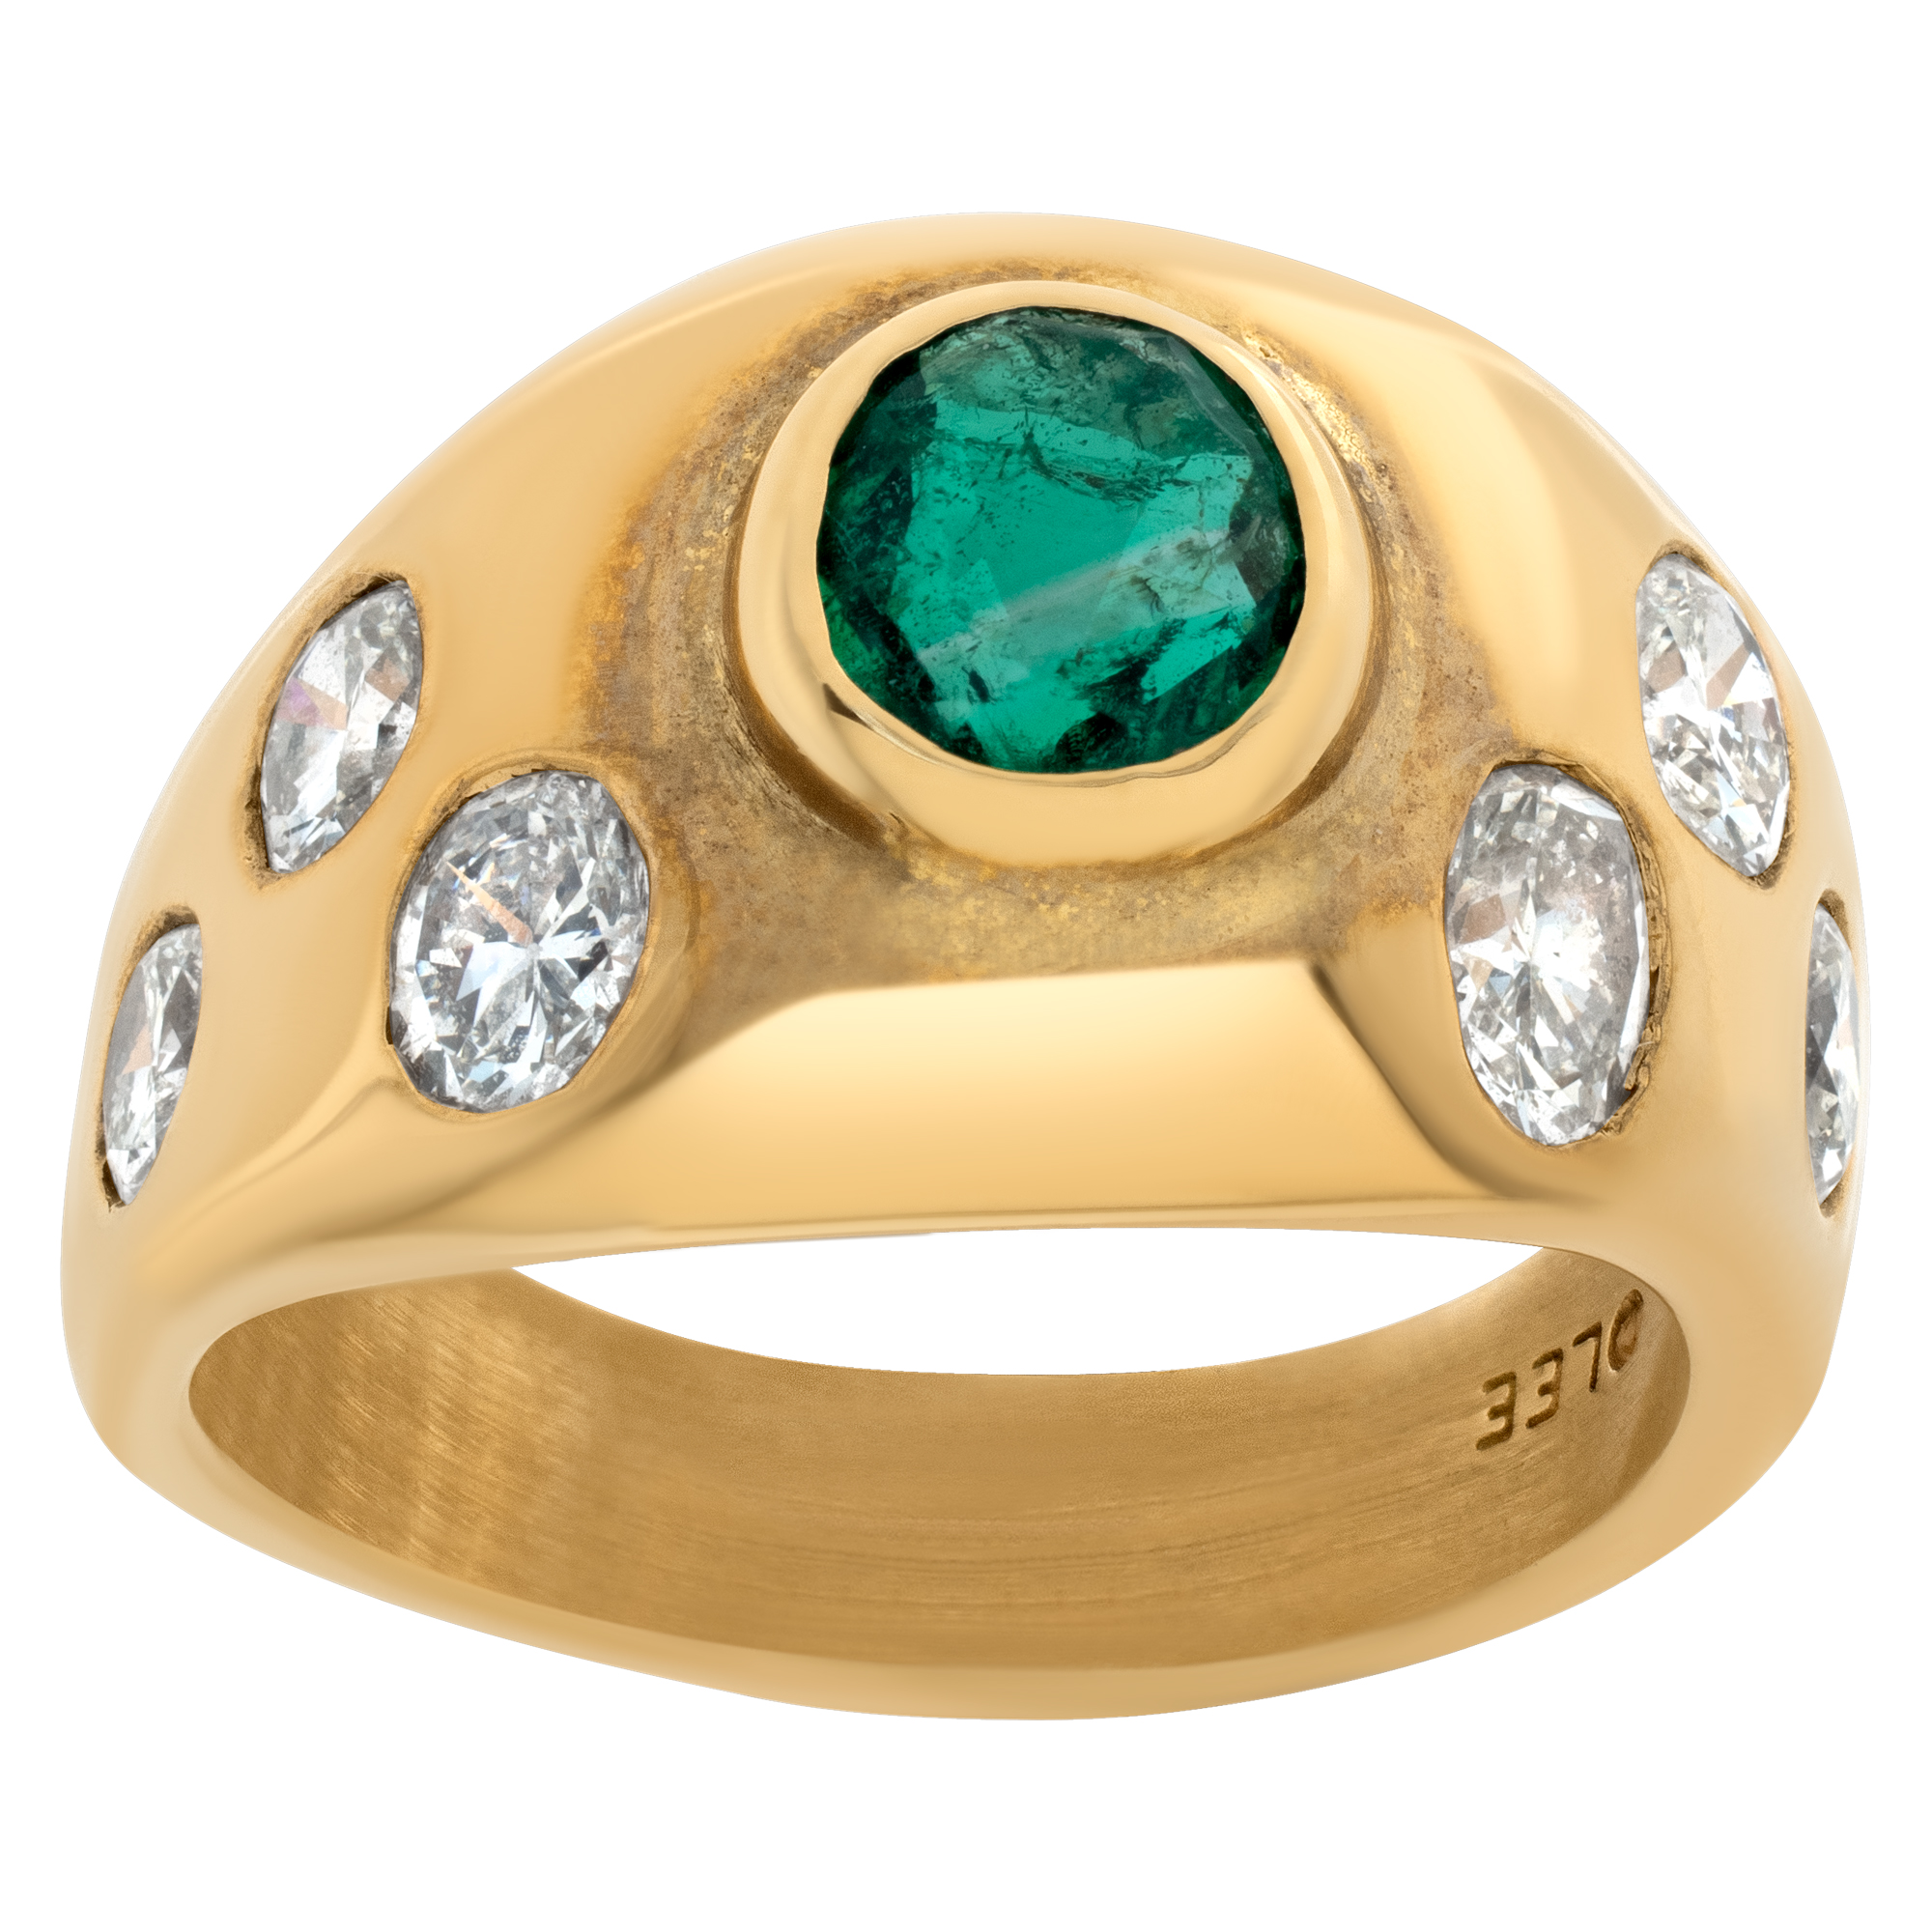 Modern "Gypsy" emerald & diamond ring in 18K yellow gold.